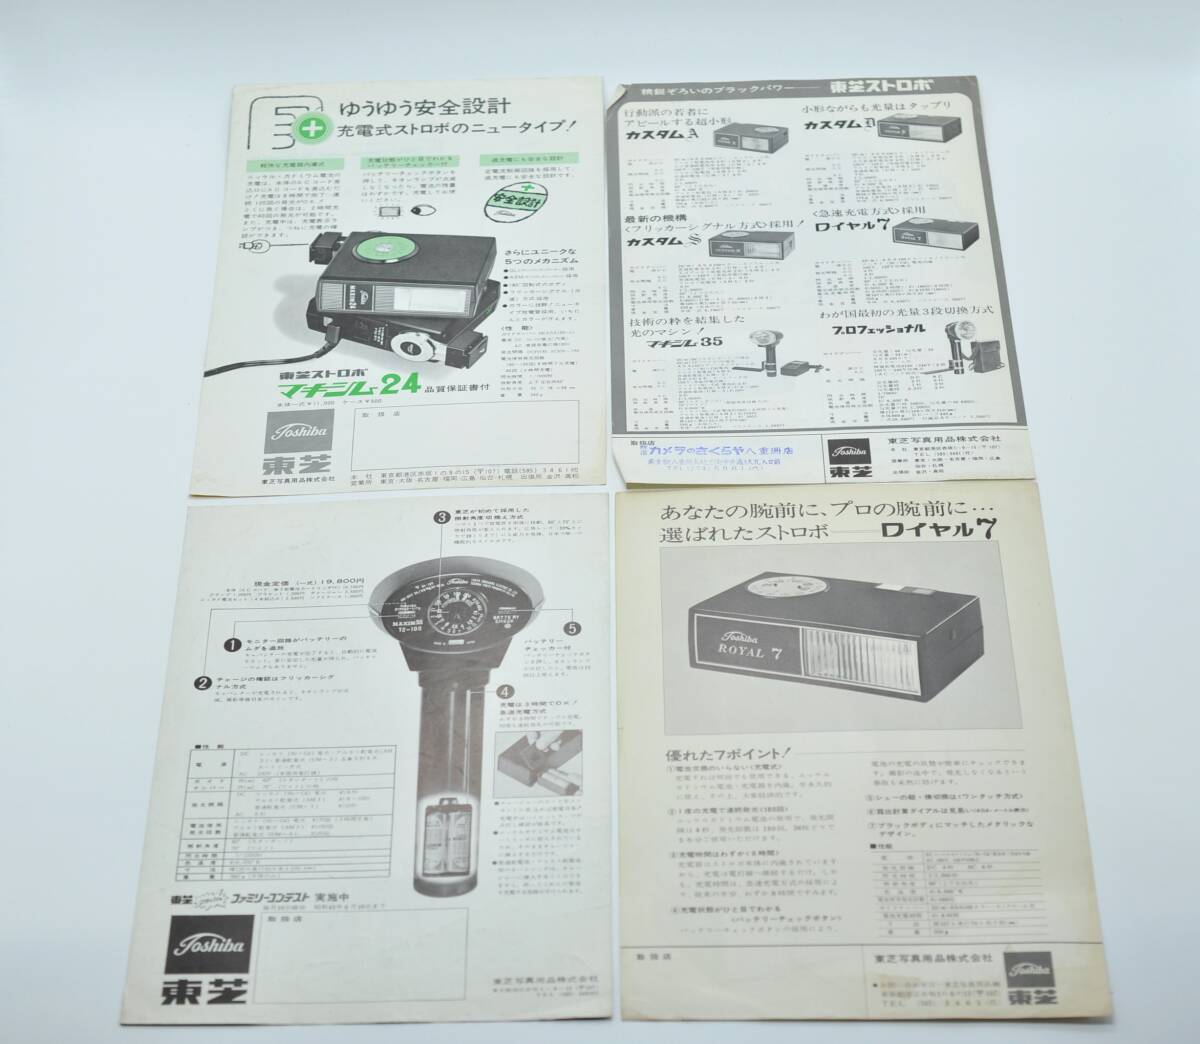 * period thing Toshiba strobo. pamphlet leaflet catalog printed matter * maxi m24 / Royal 7 / maxi m35 / strobo various *0524-52